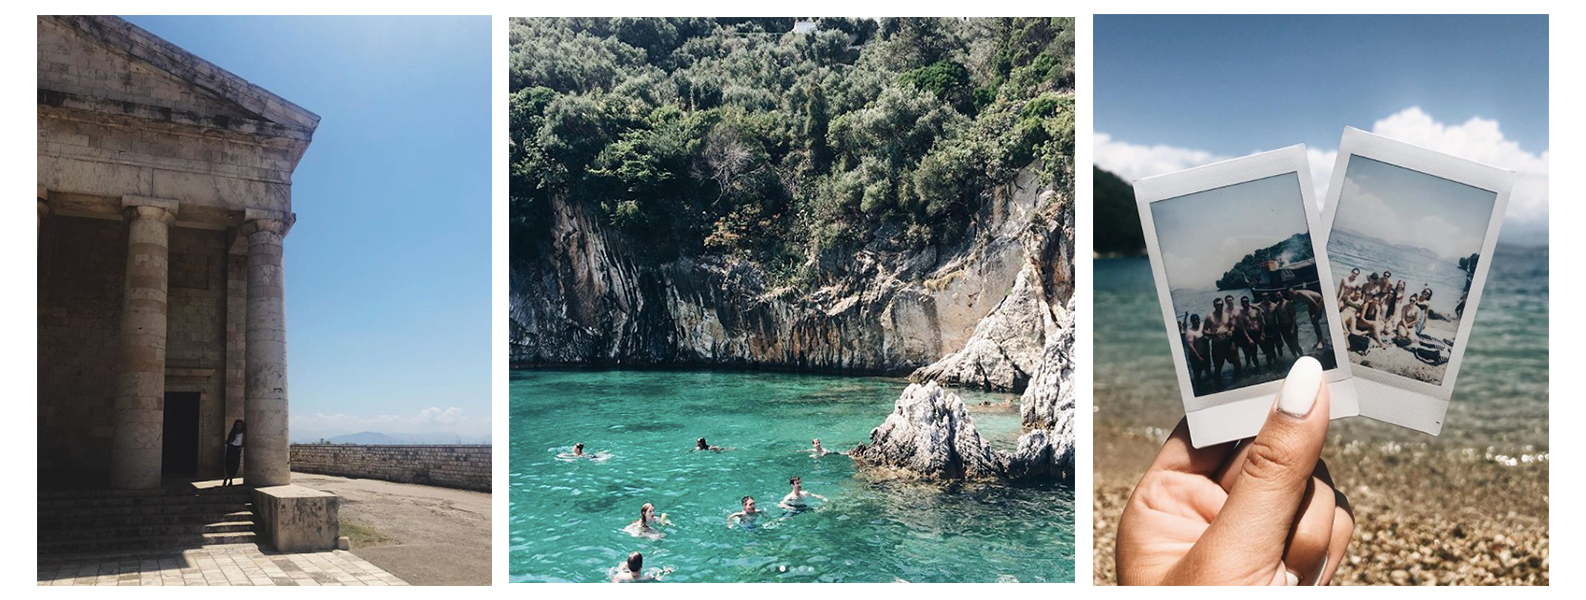 Blog Corfu karrisaloves College Hill Trip To Anywhere